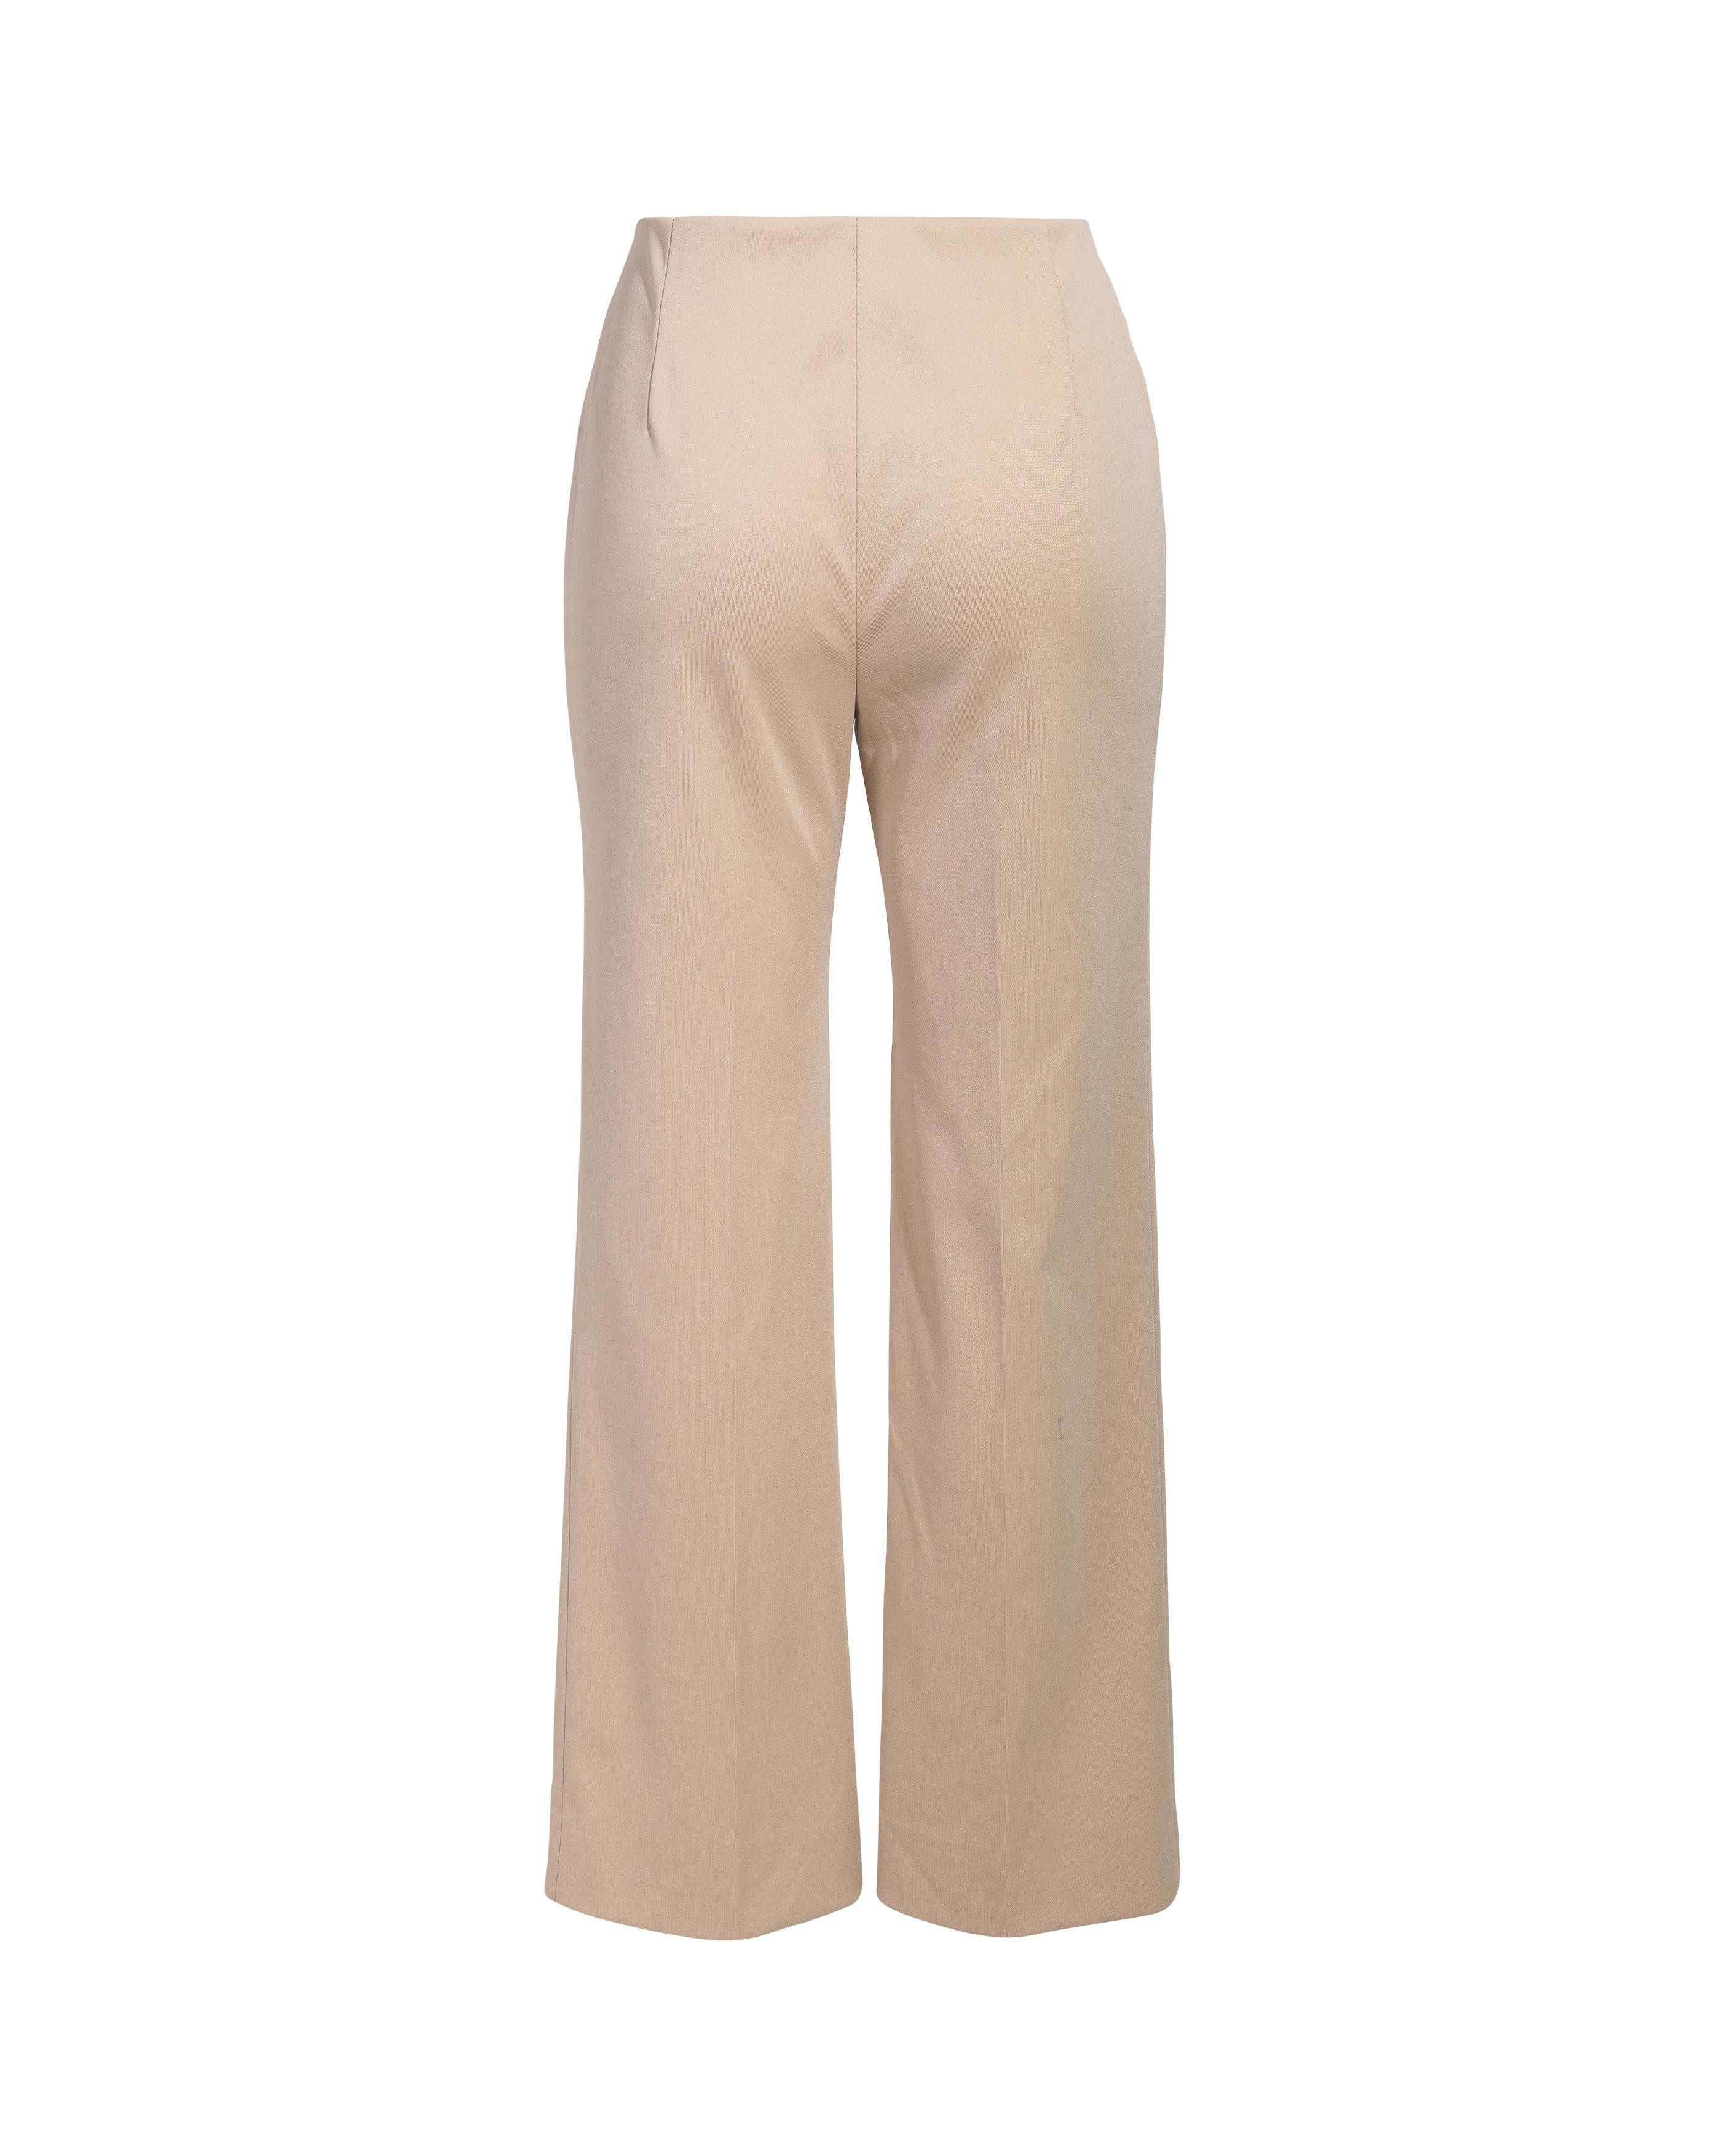 S/S 1996 Prada by Miuccia Prada Short Sleeve Pant Suit Set 2